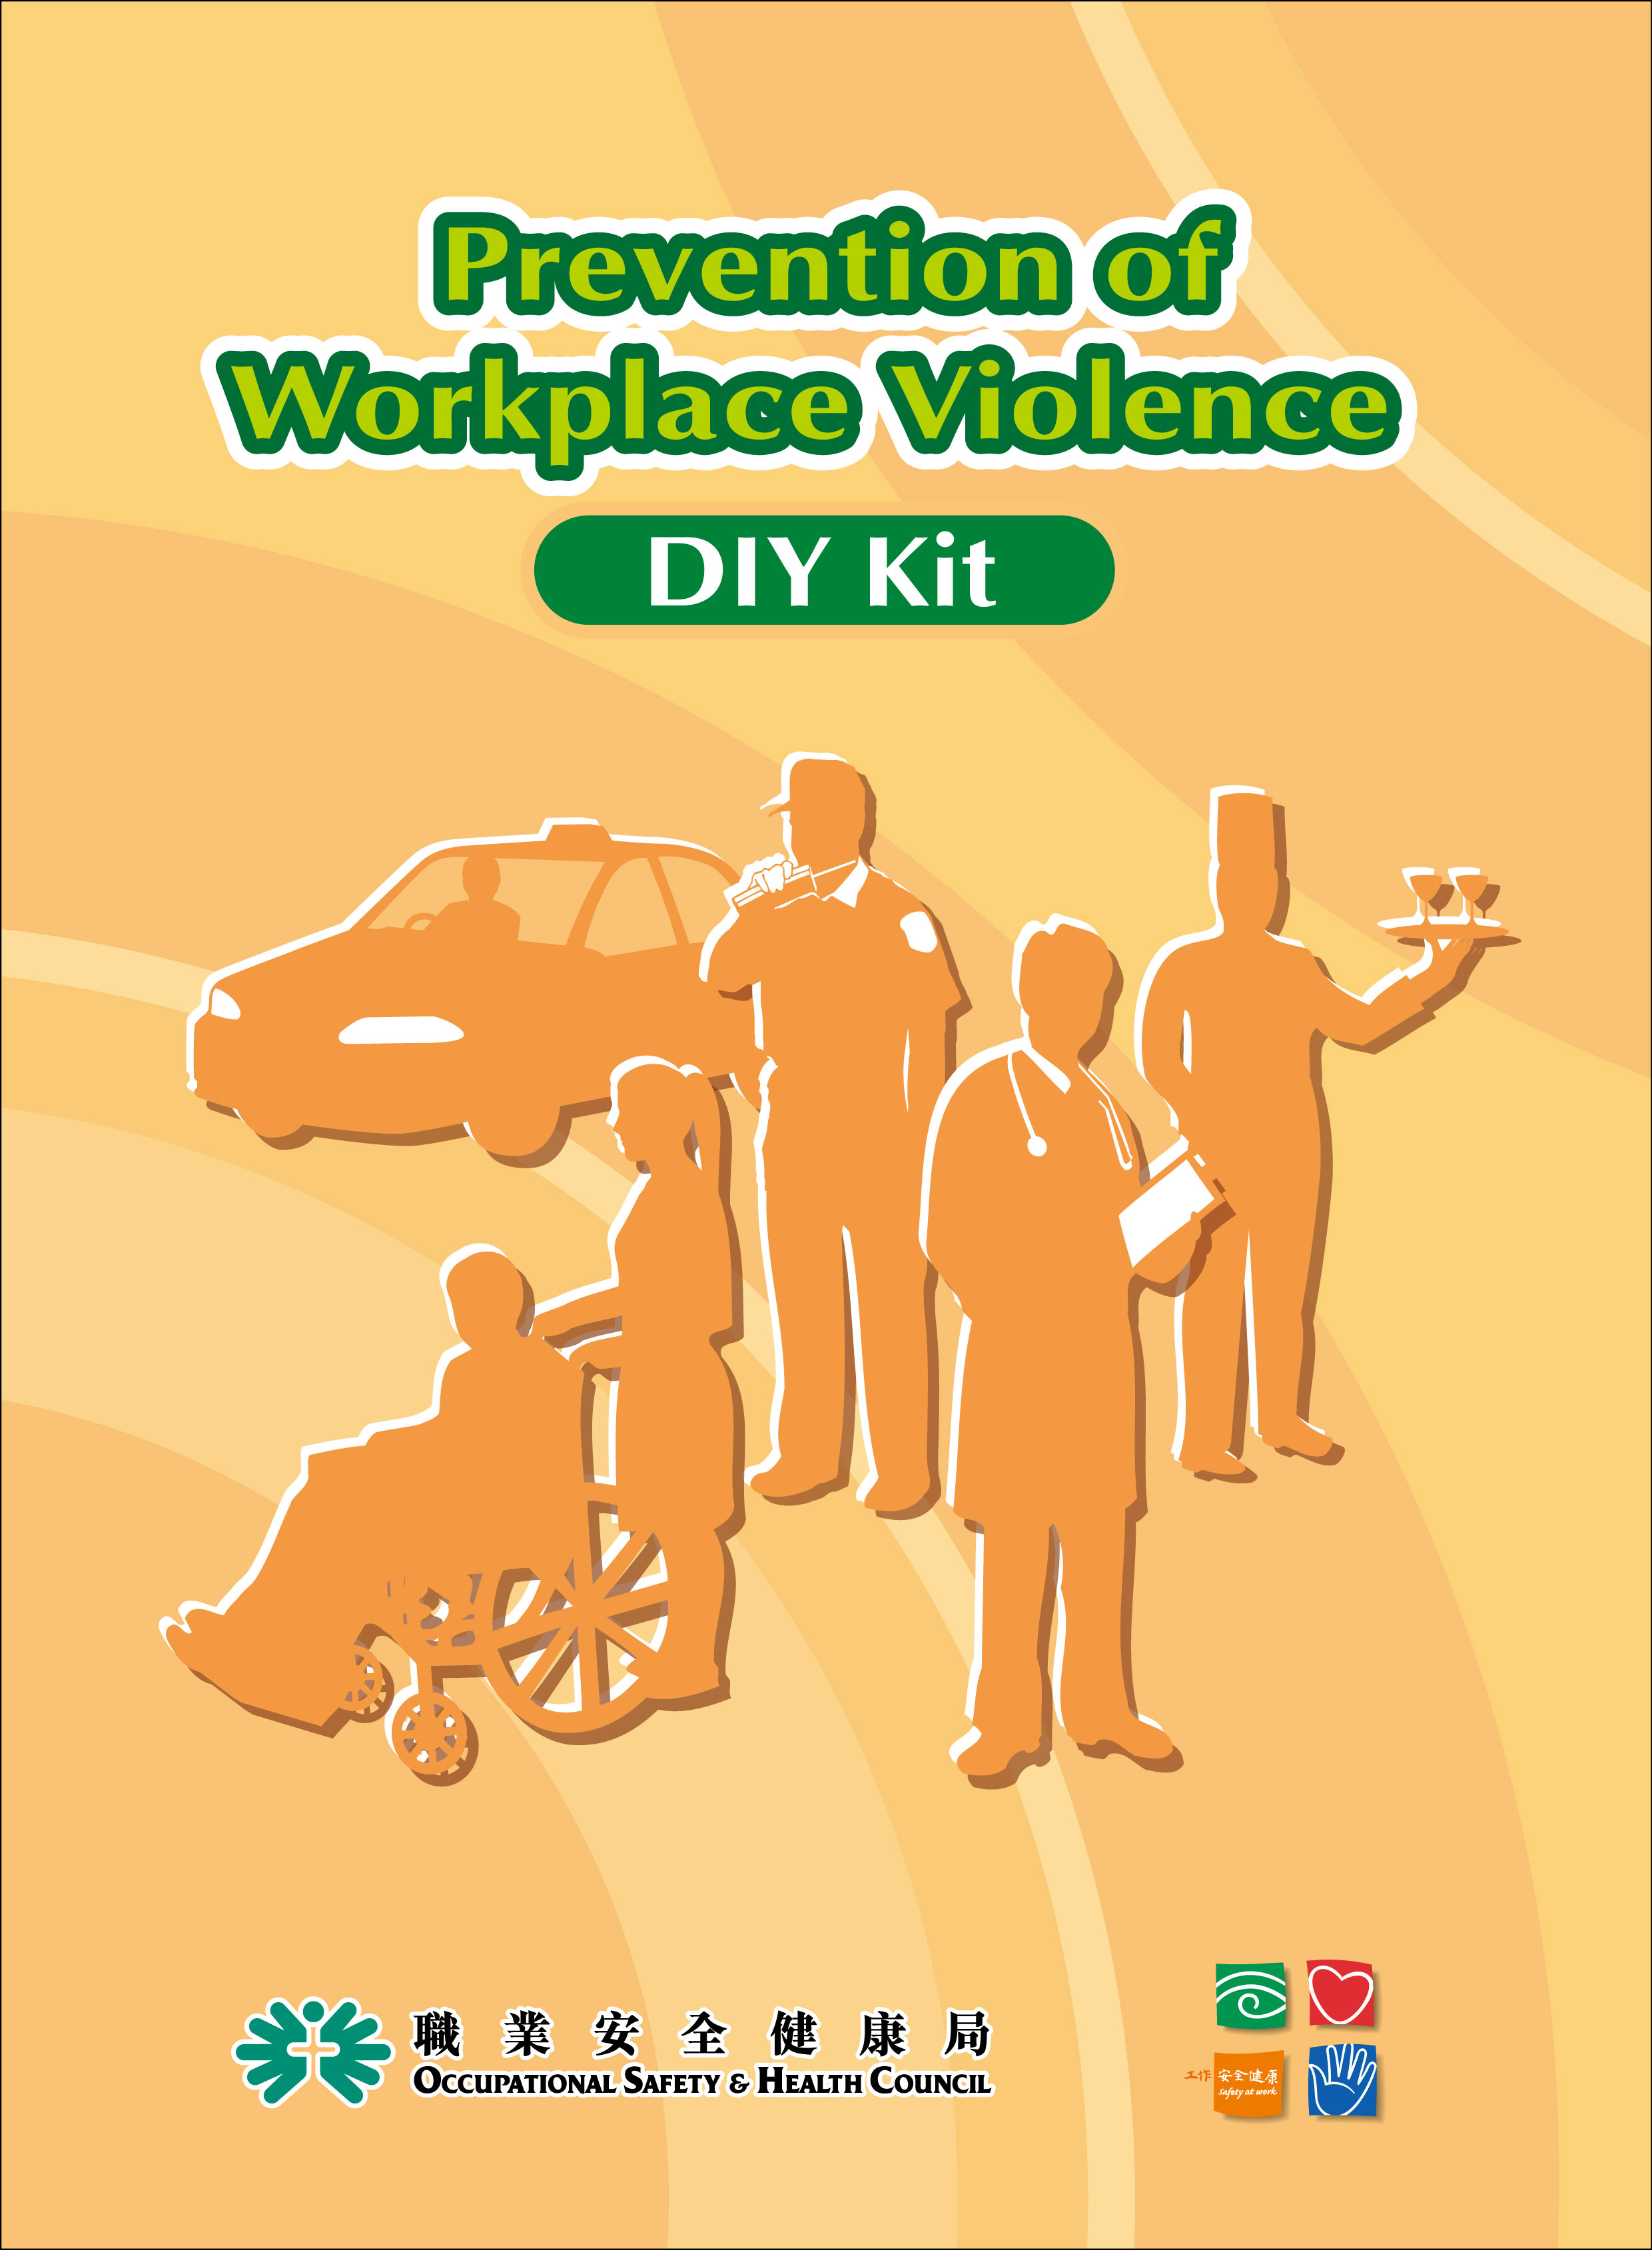 DIY Kit on Prevention of Workplace Violence (published by OSHC)